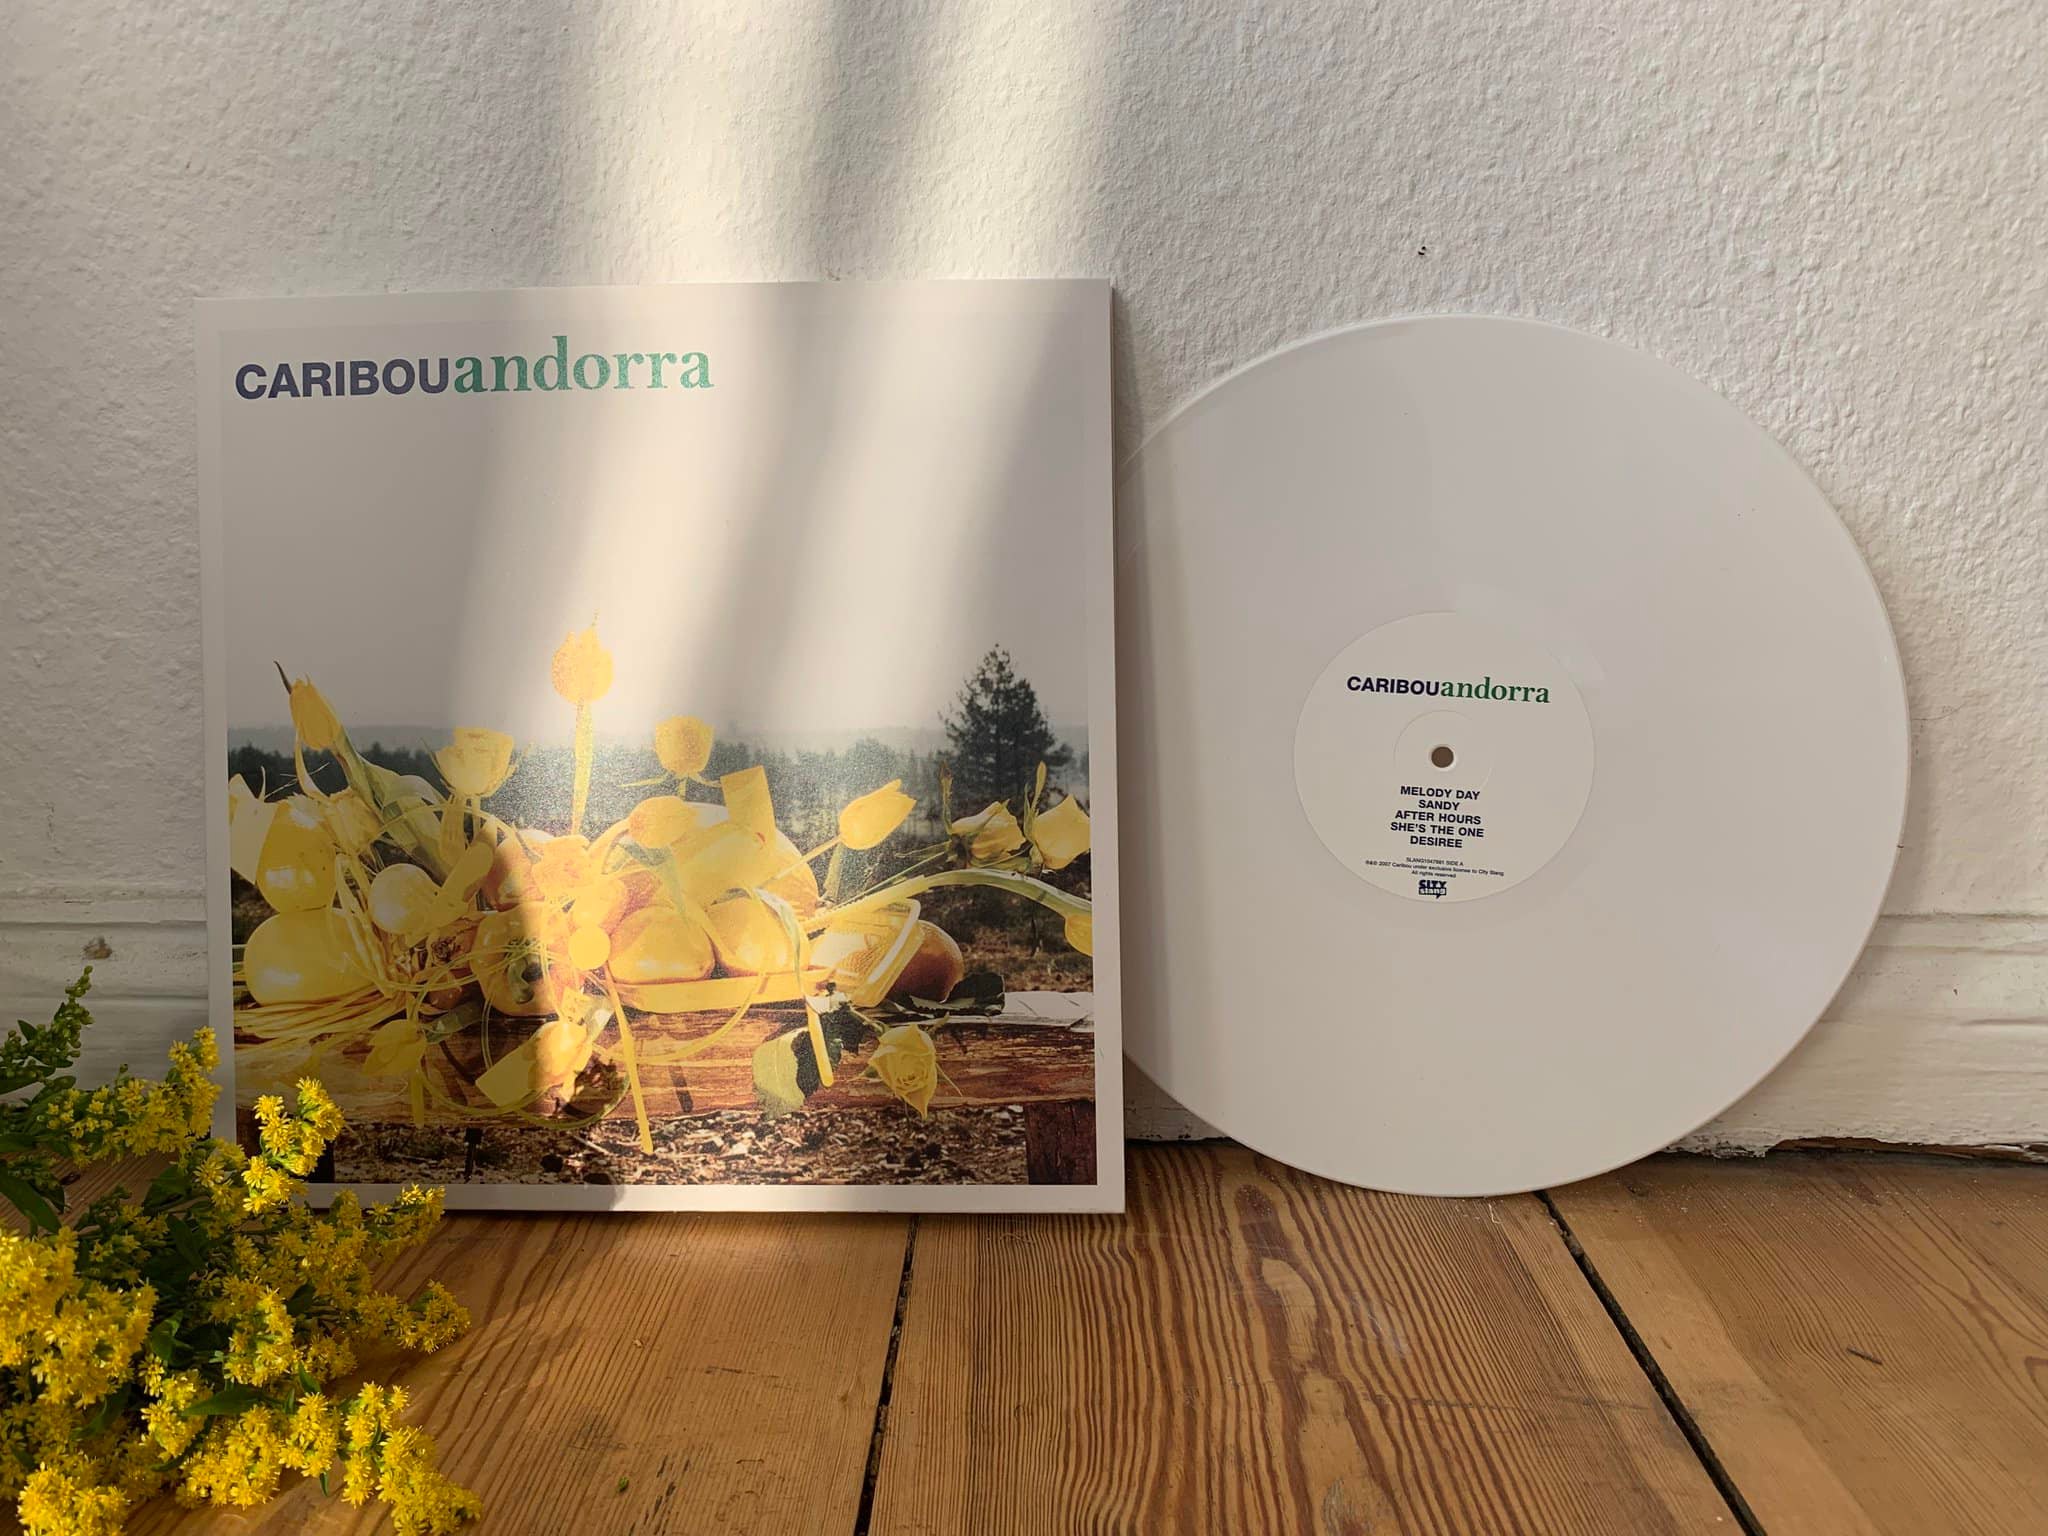 Caribou – “Andorra” 15 year anniversay edition